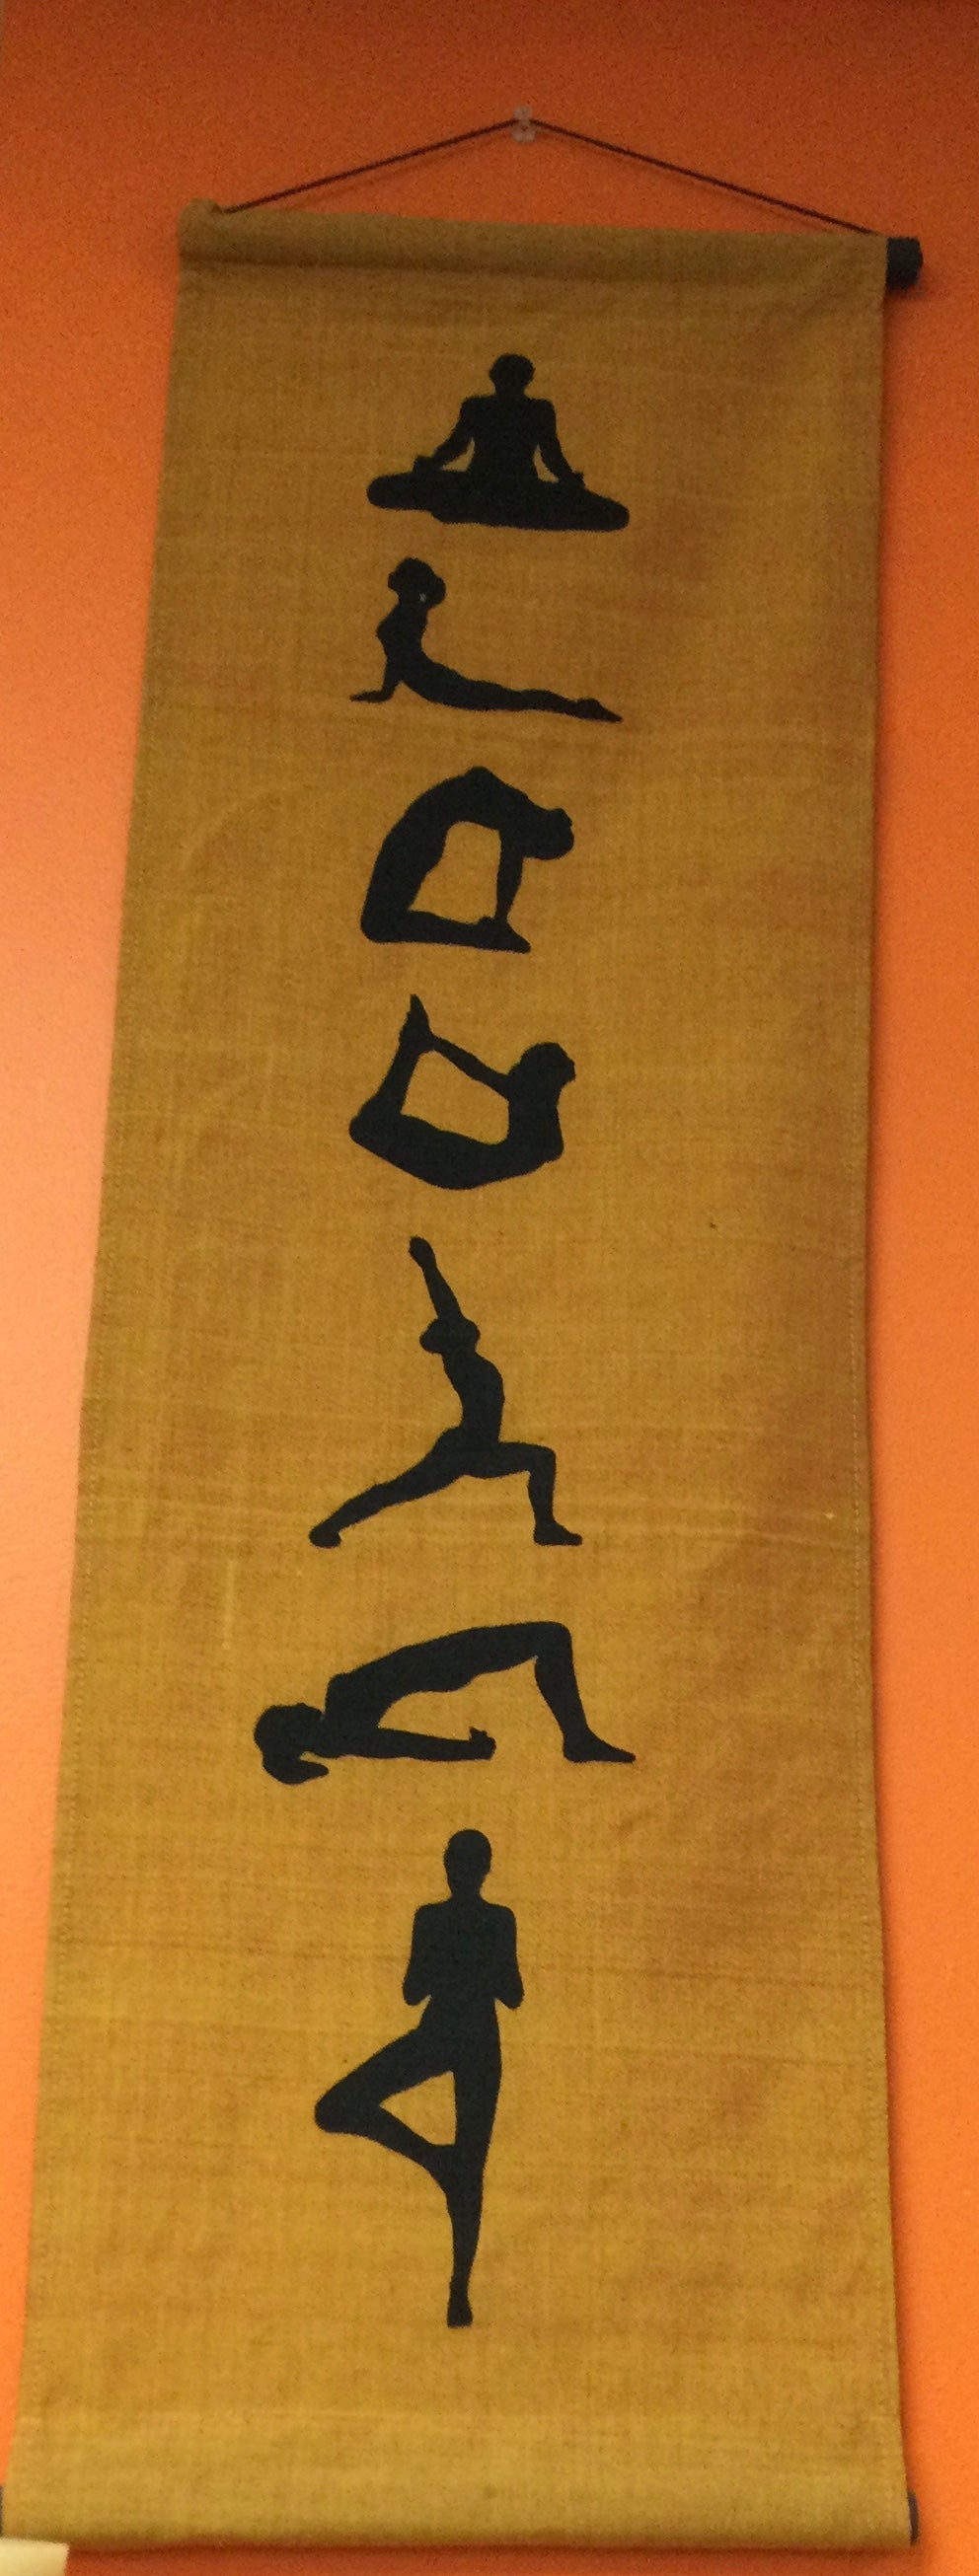 Hanging Yoga Pose Tapestry